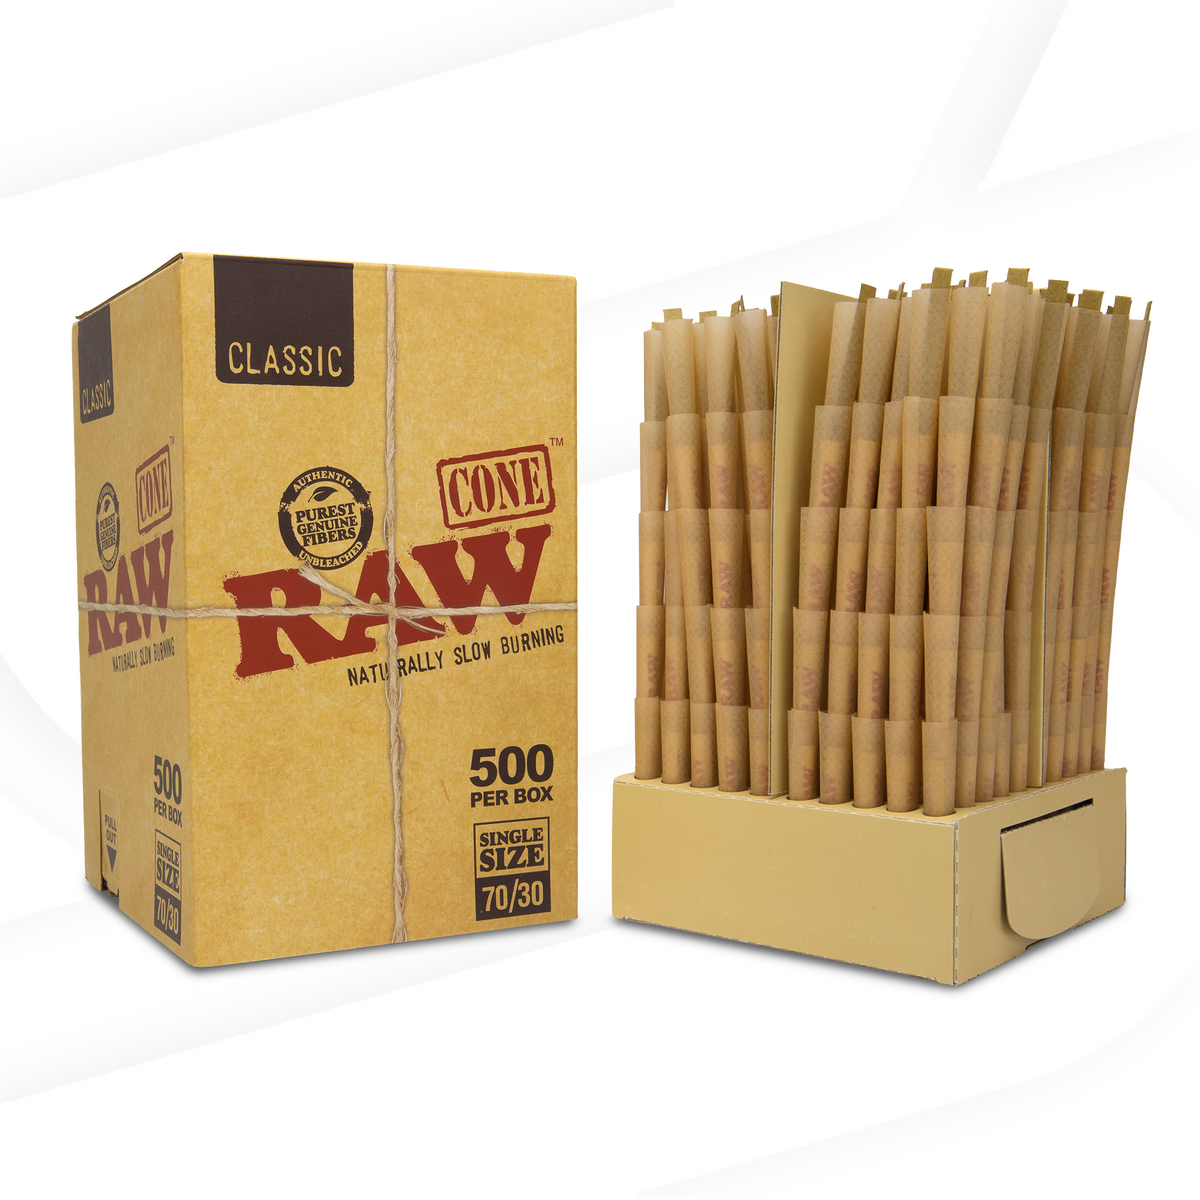 RAW Classic Single Size 70/30 | Bulk Box | 500 Cones RAW Cones RAWT-CNCL-3003 esd-official